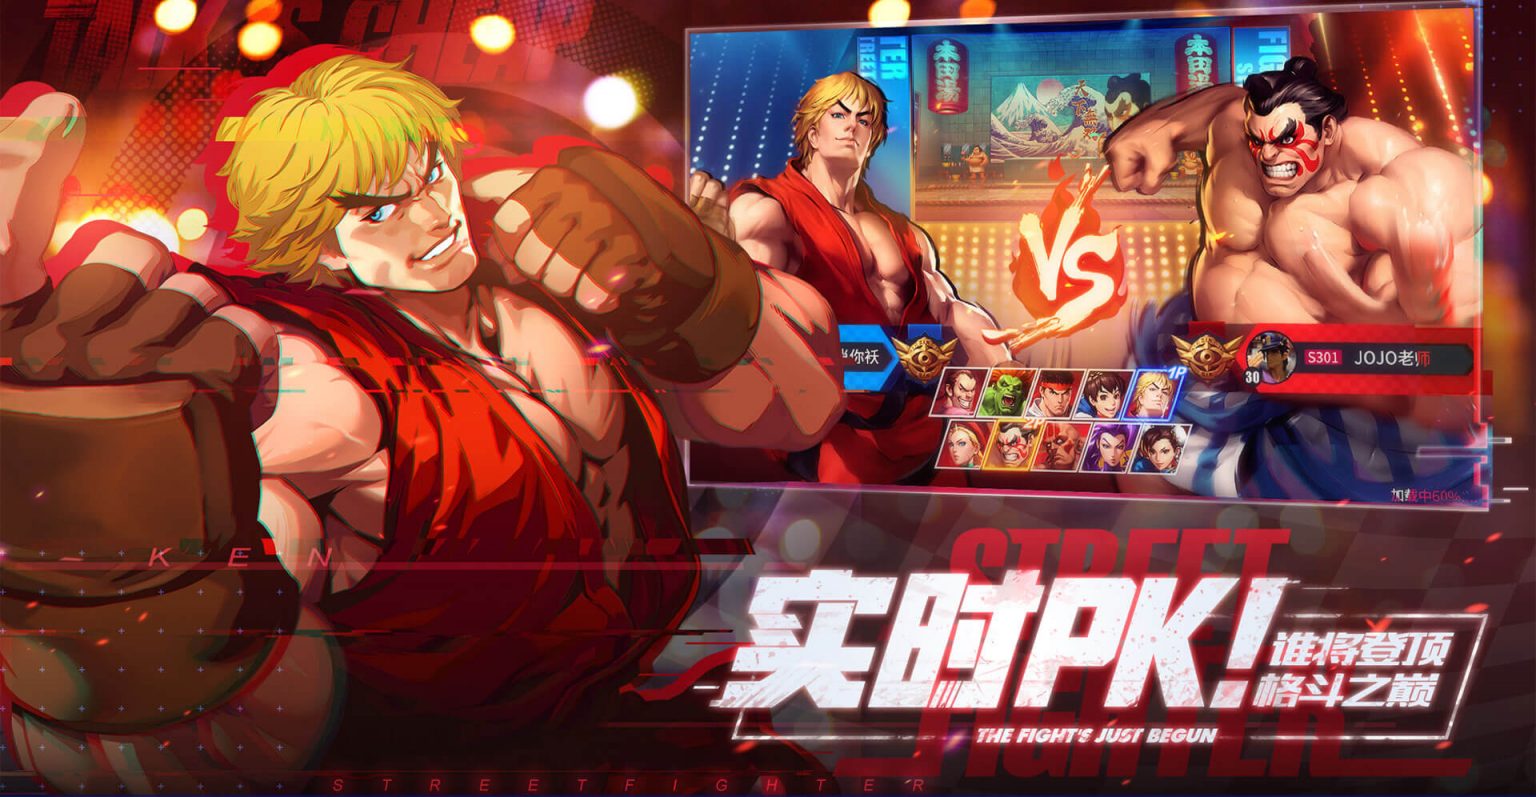 Street-Fighter-Duel-image-3-1536x797.jpg